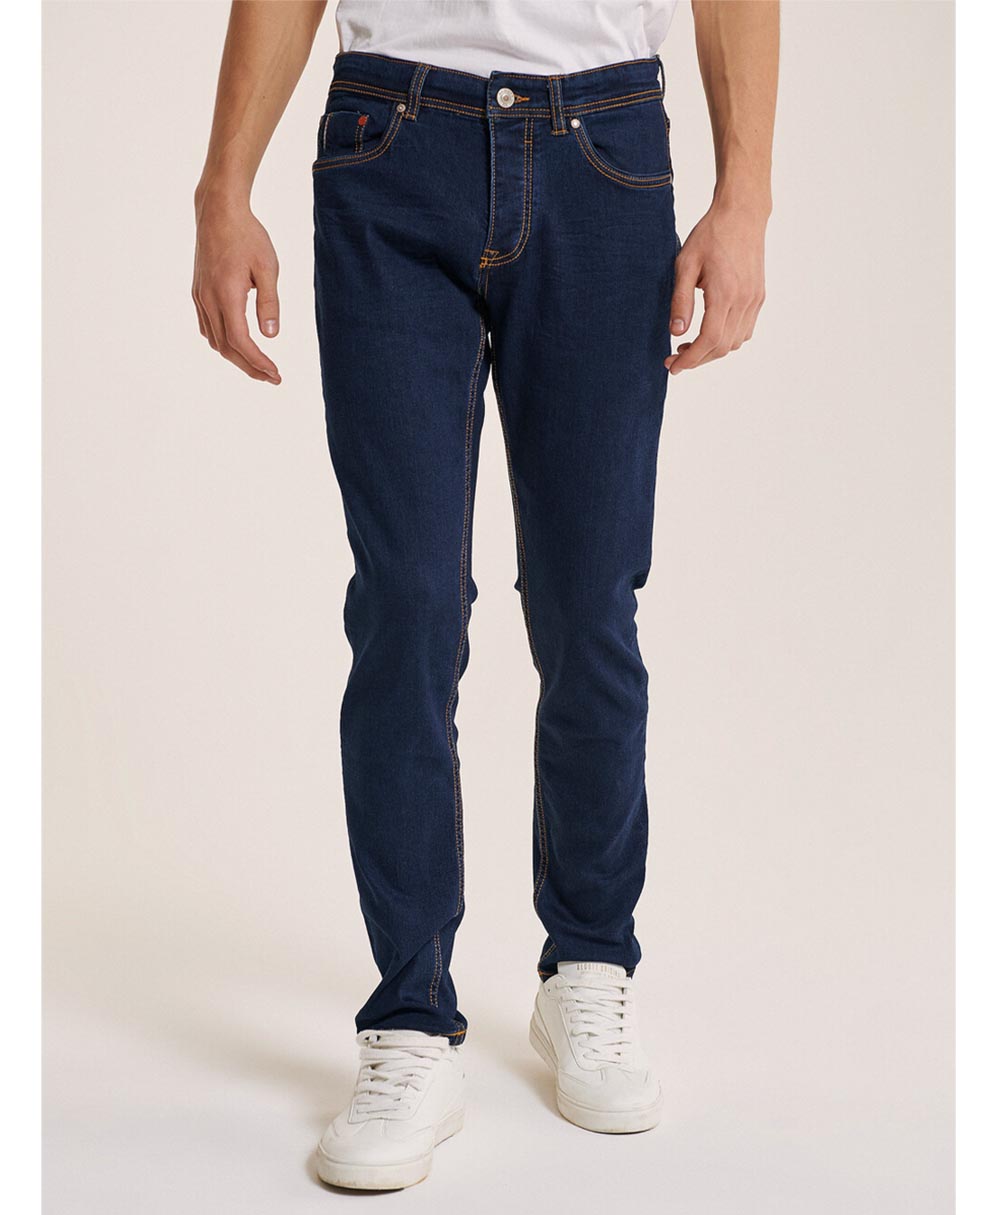 blue jeans navy skouro mple jean italiko skinny fit super stretch